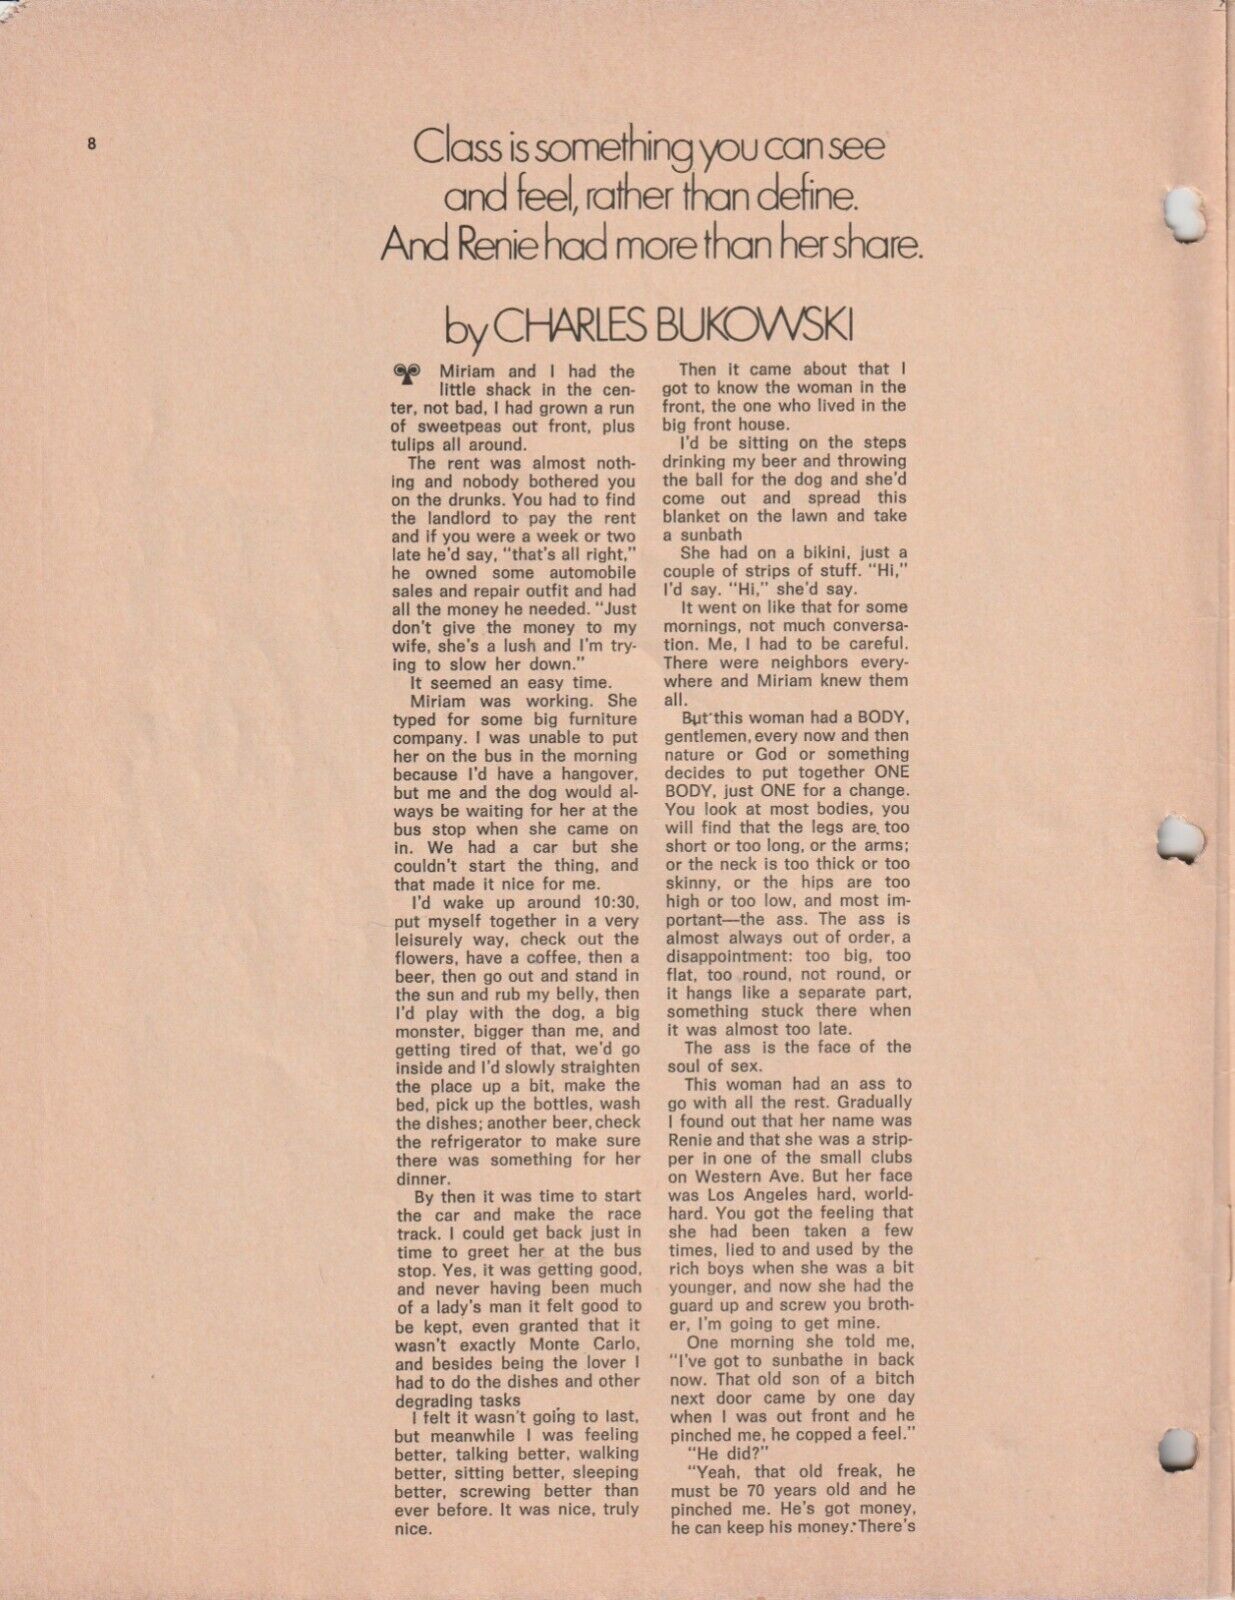 Fling January 1971 -- Illustrated Short Story by Charles Bukowski: Chippy Chippy Suck Nuts (1971)